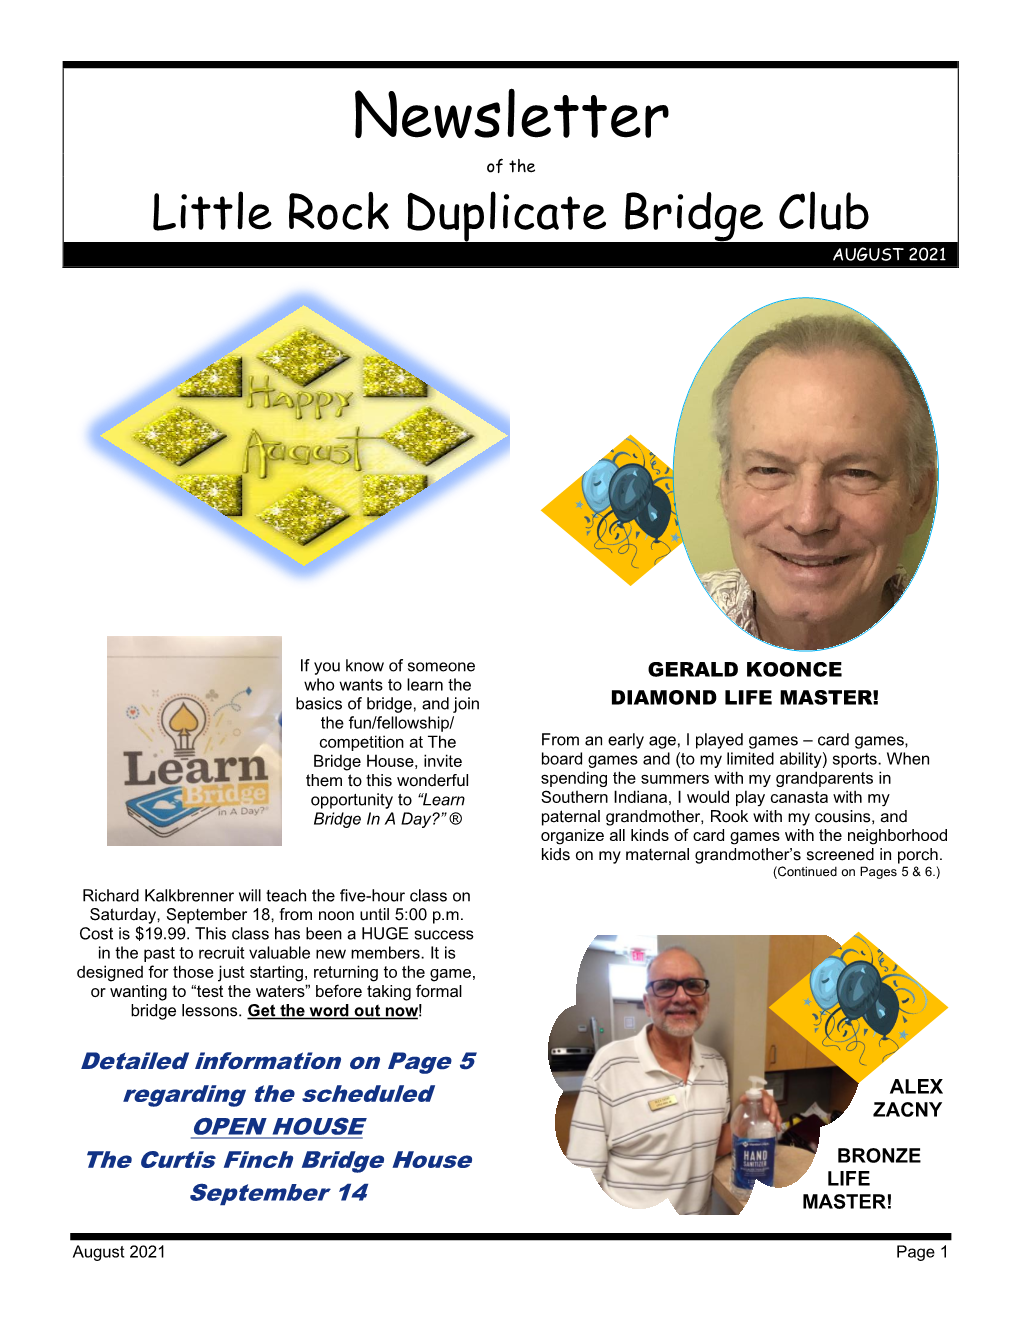 Newsletter of the Little Rock Duplicate Bridge Club AUGUST 2021